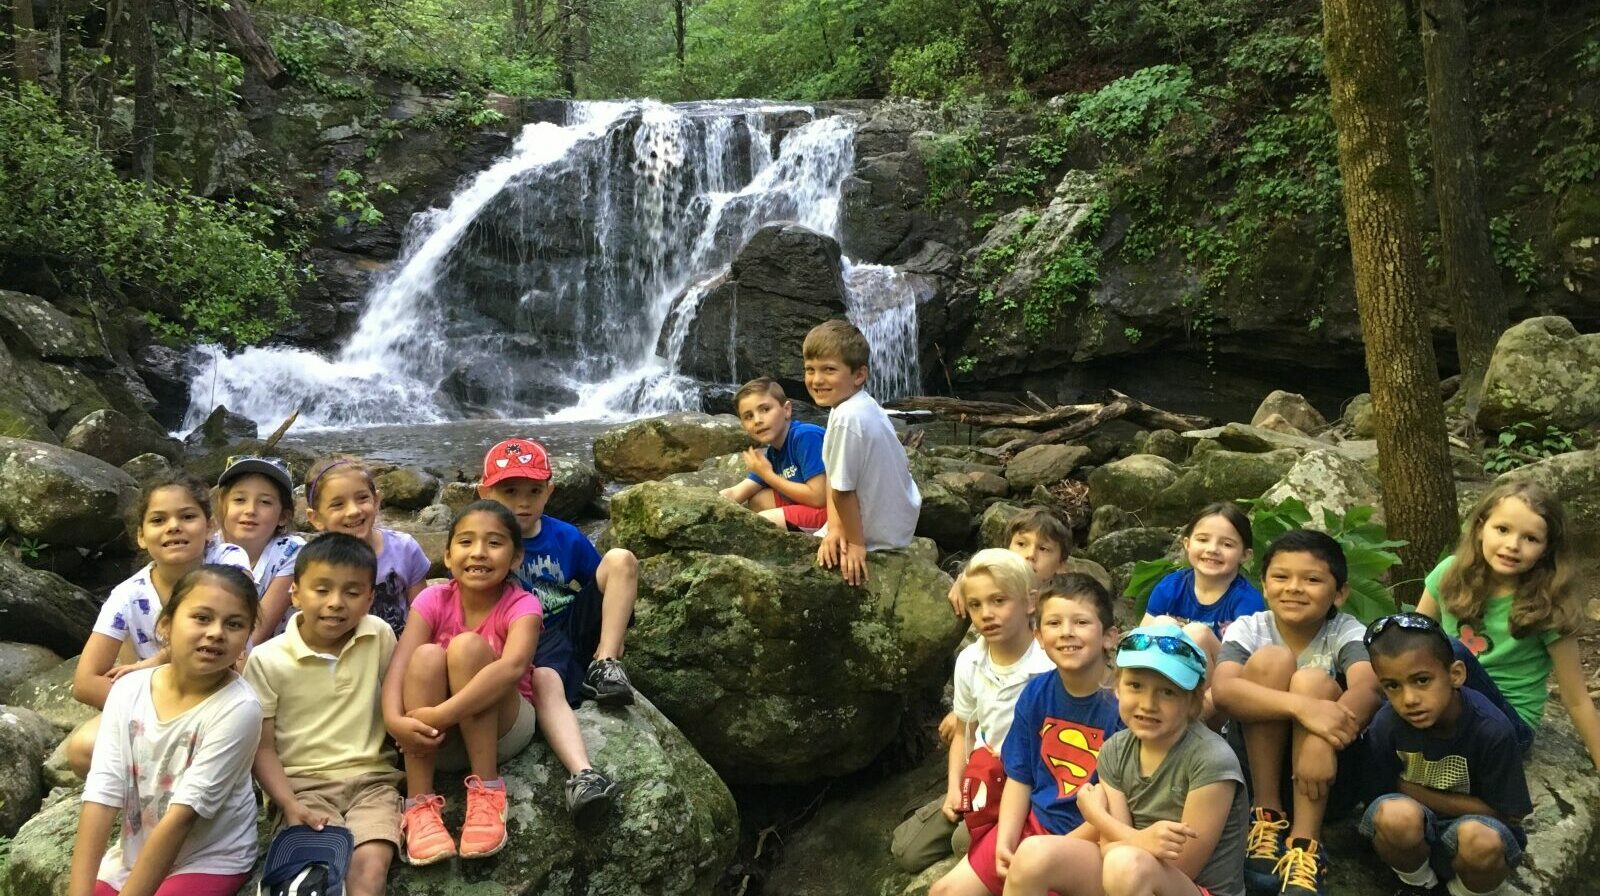 Children enjoying a waterfall near Bright's Creek